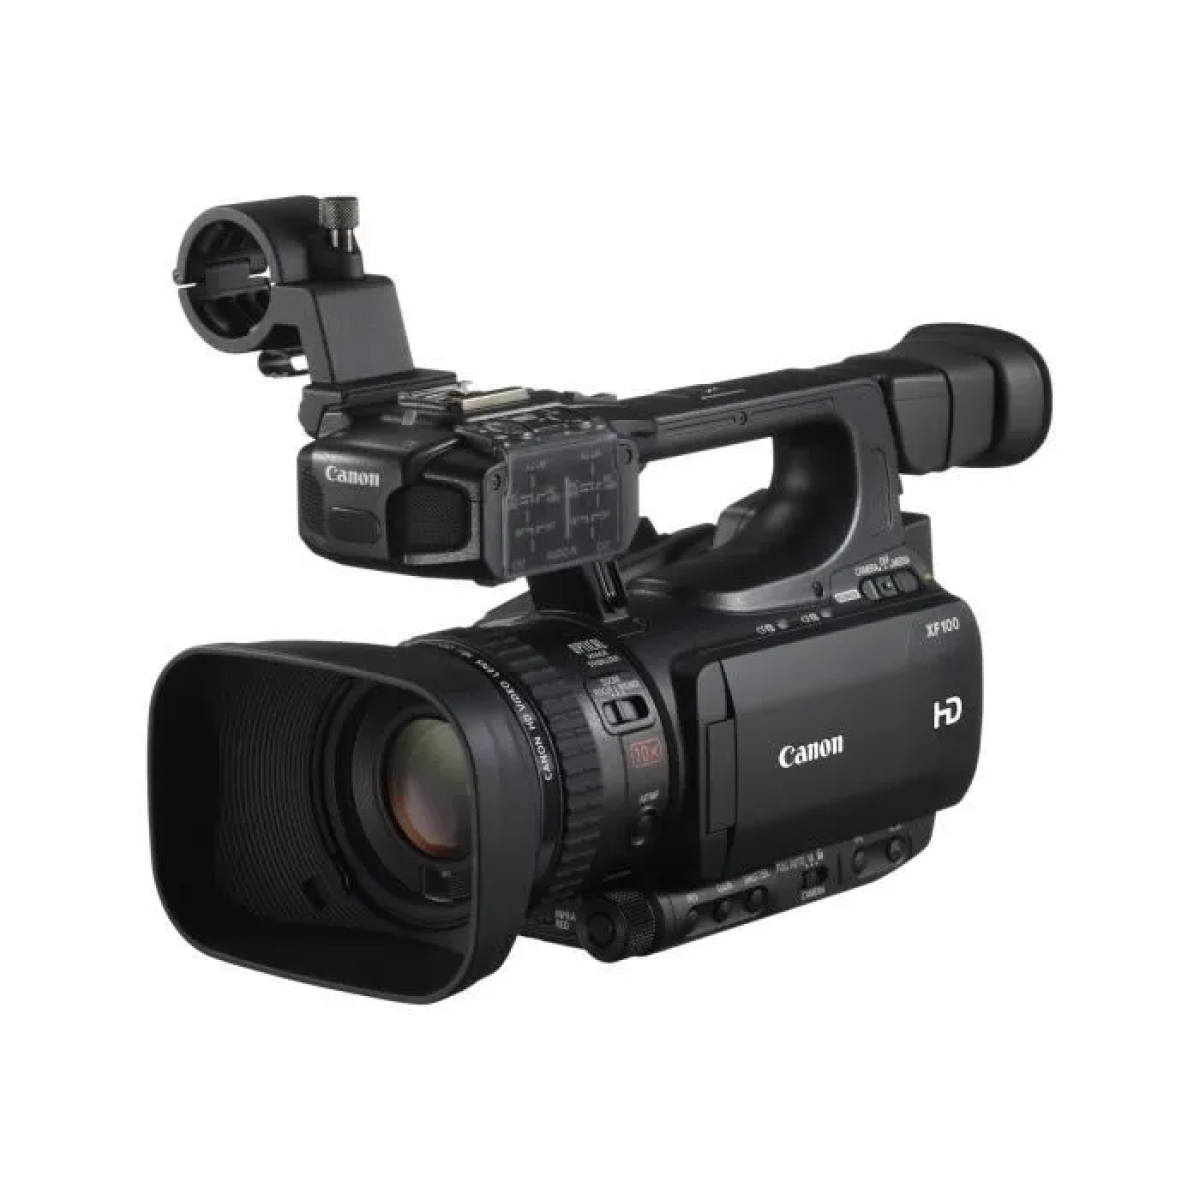 Canon XF100 capteur 1/3 Full HD ( 1080p) 2,37Mp